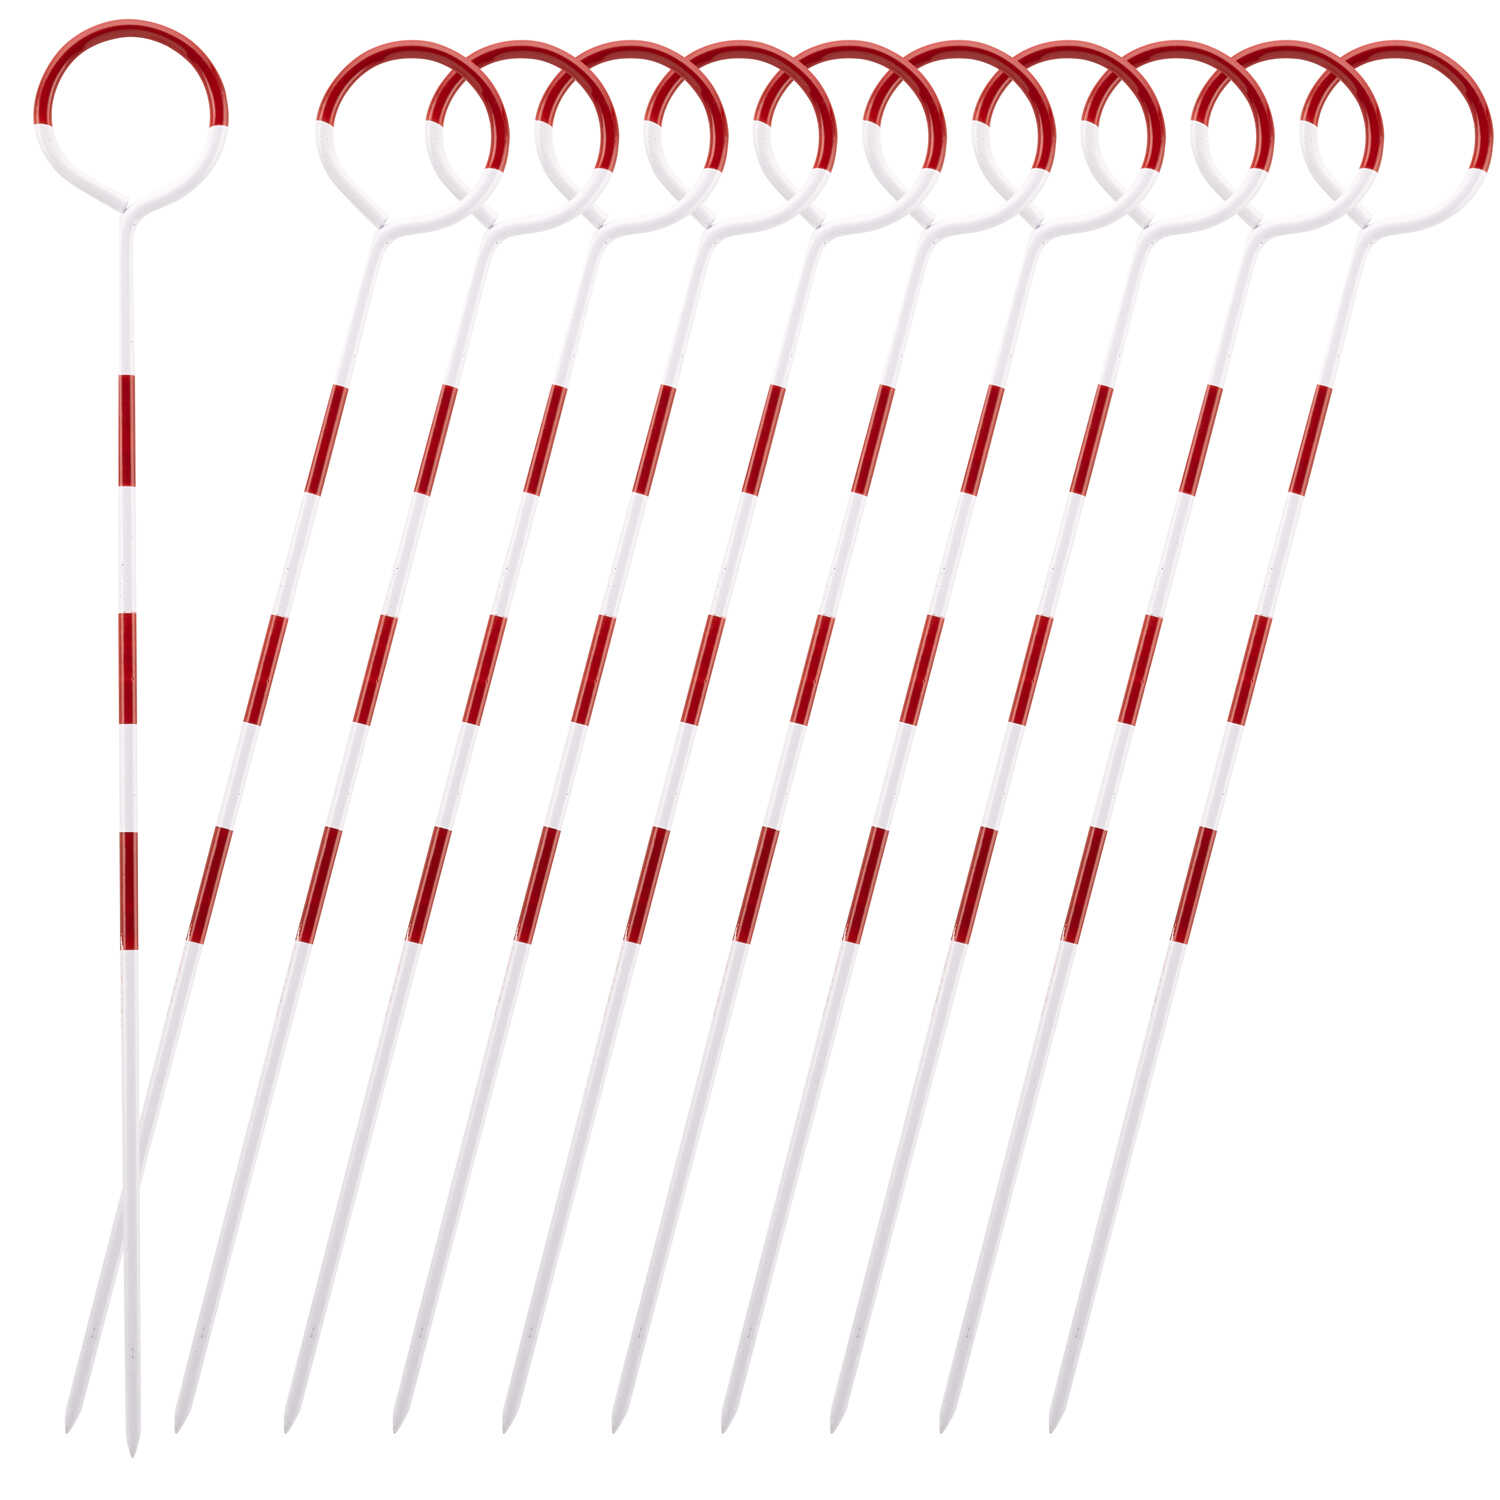 C!   haining Pins Steel Arrows Set Of 11 Ebay - details about chaining pins steel arrows set of 11